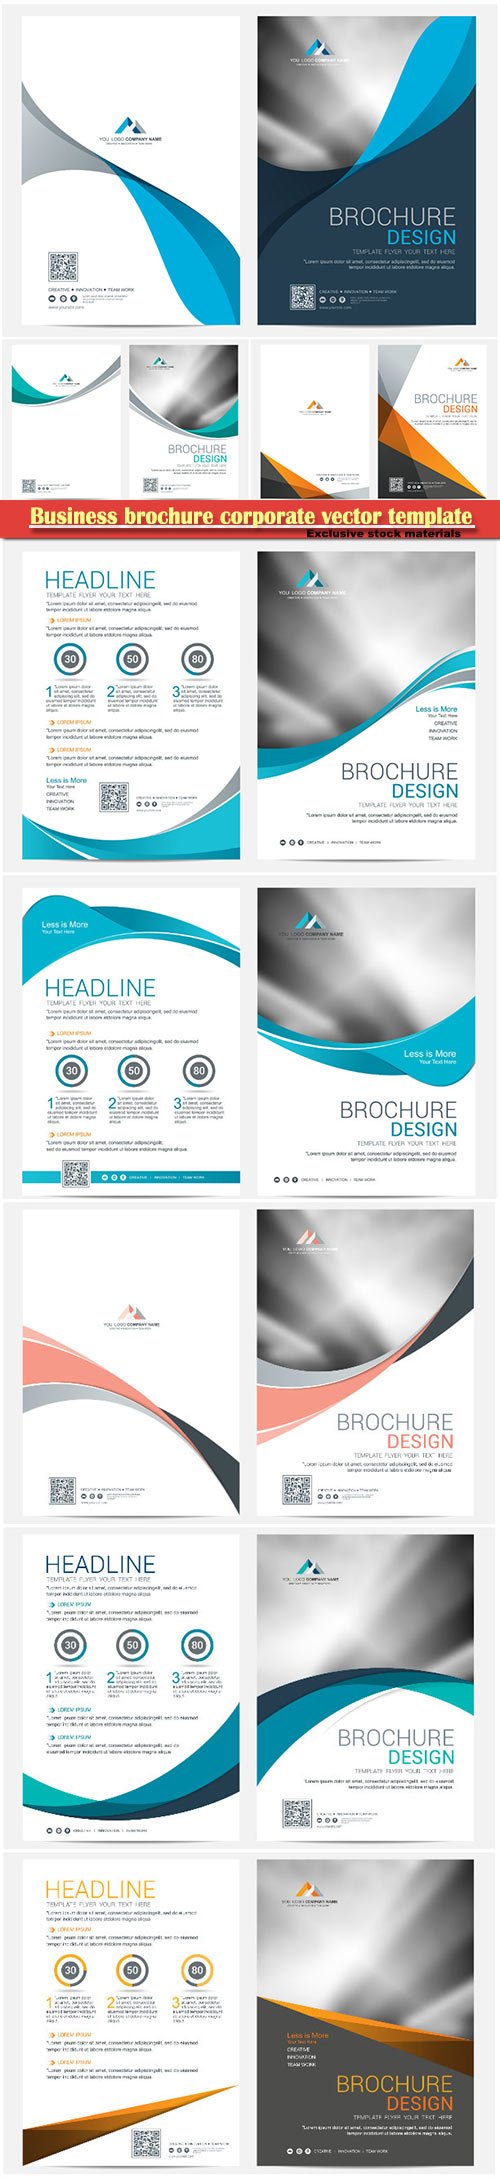 Business brochure corporate vector template, magazine flyer mockup